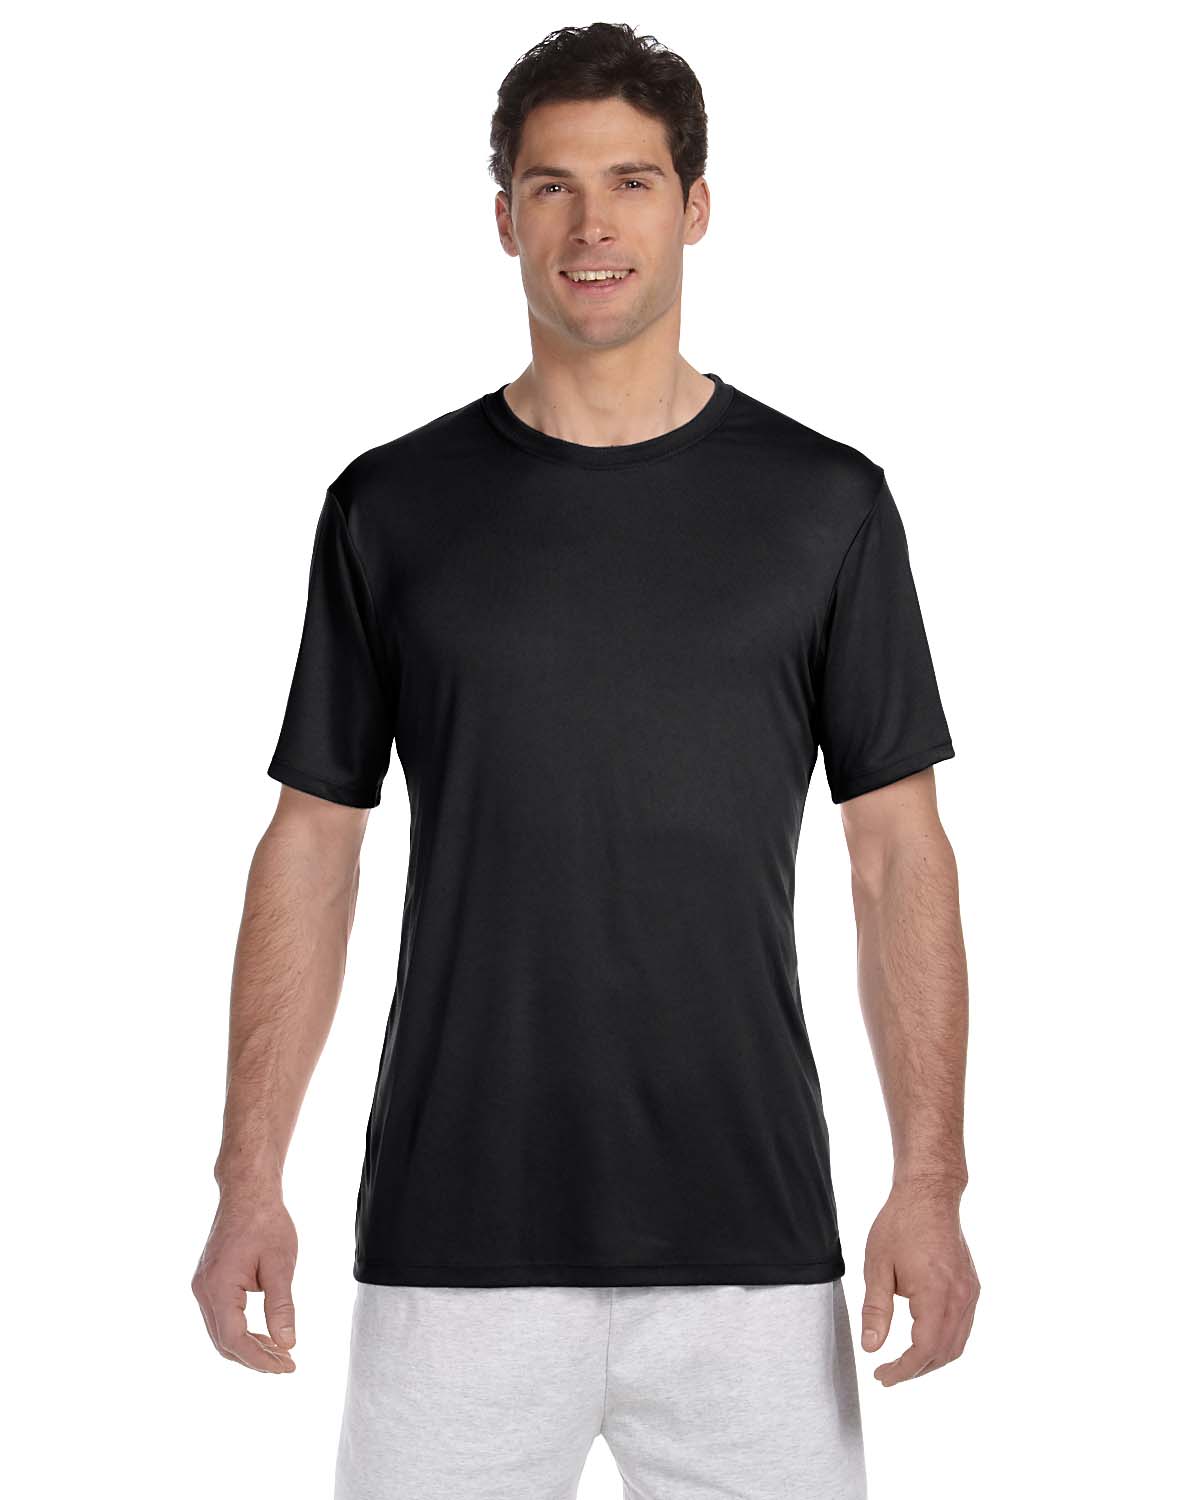 Hanes 4820 Adult 4 oz. Cool DRI® 100% Polyester T-Shirt - Shirtmax